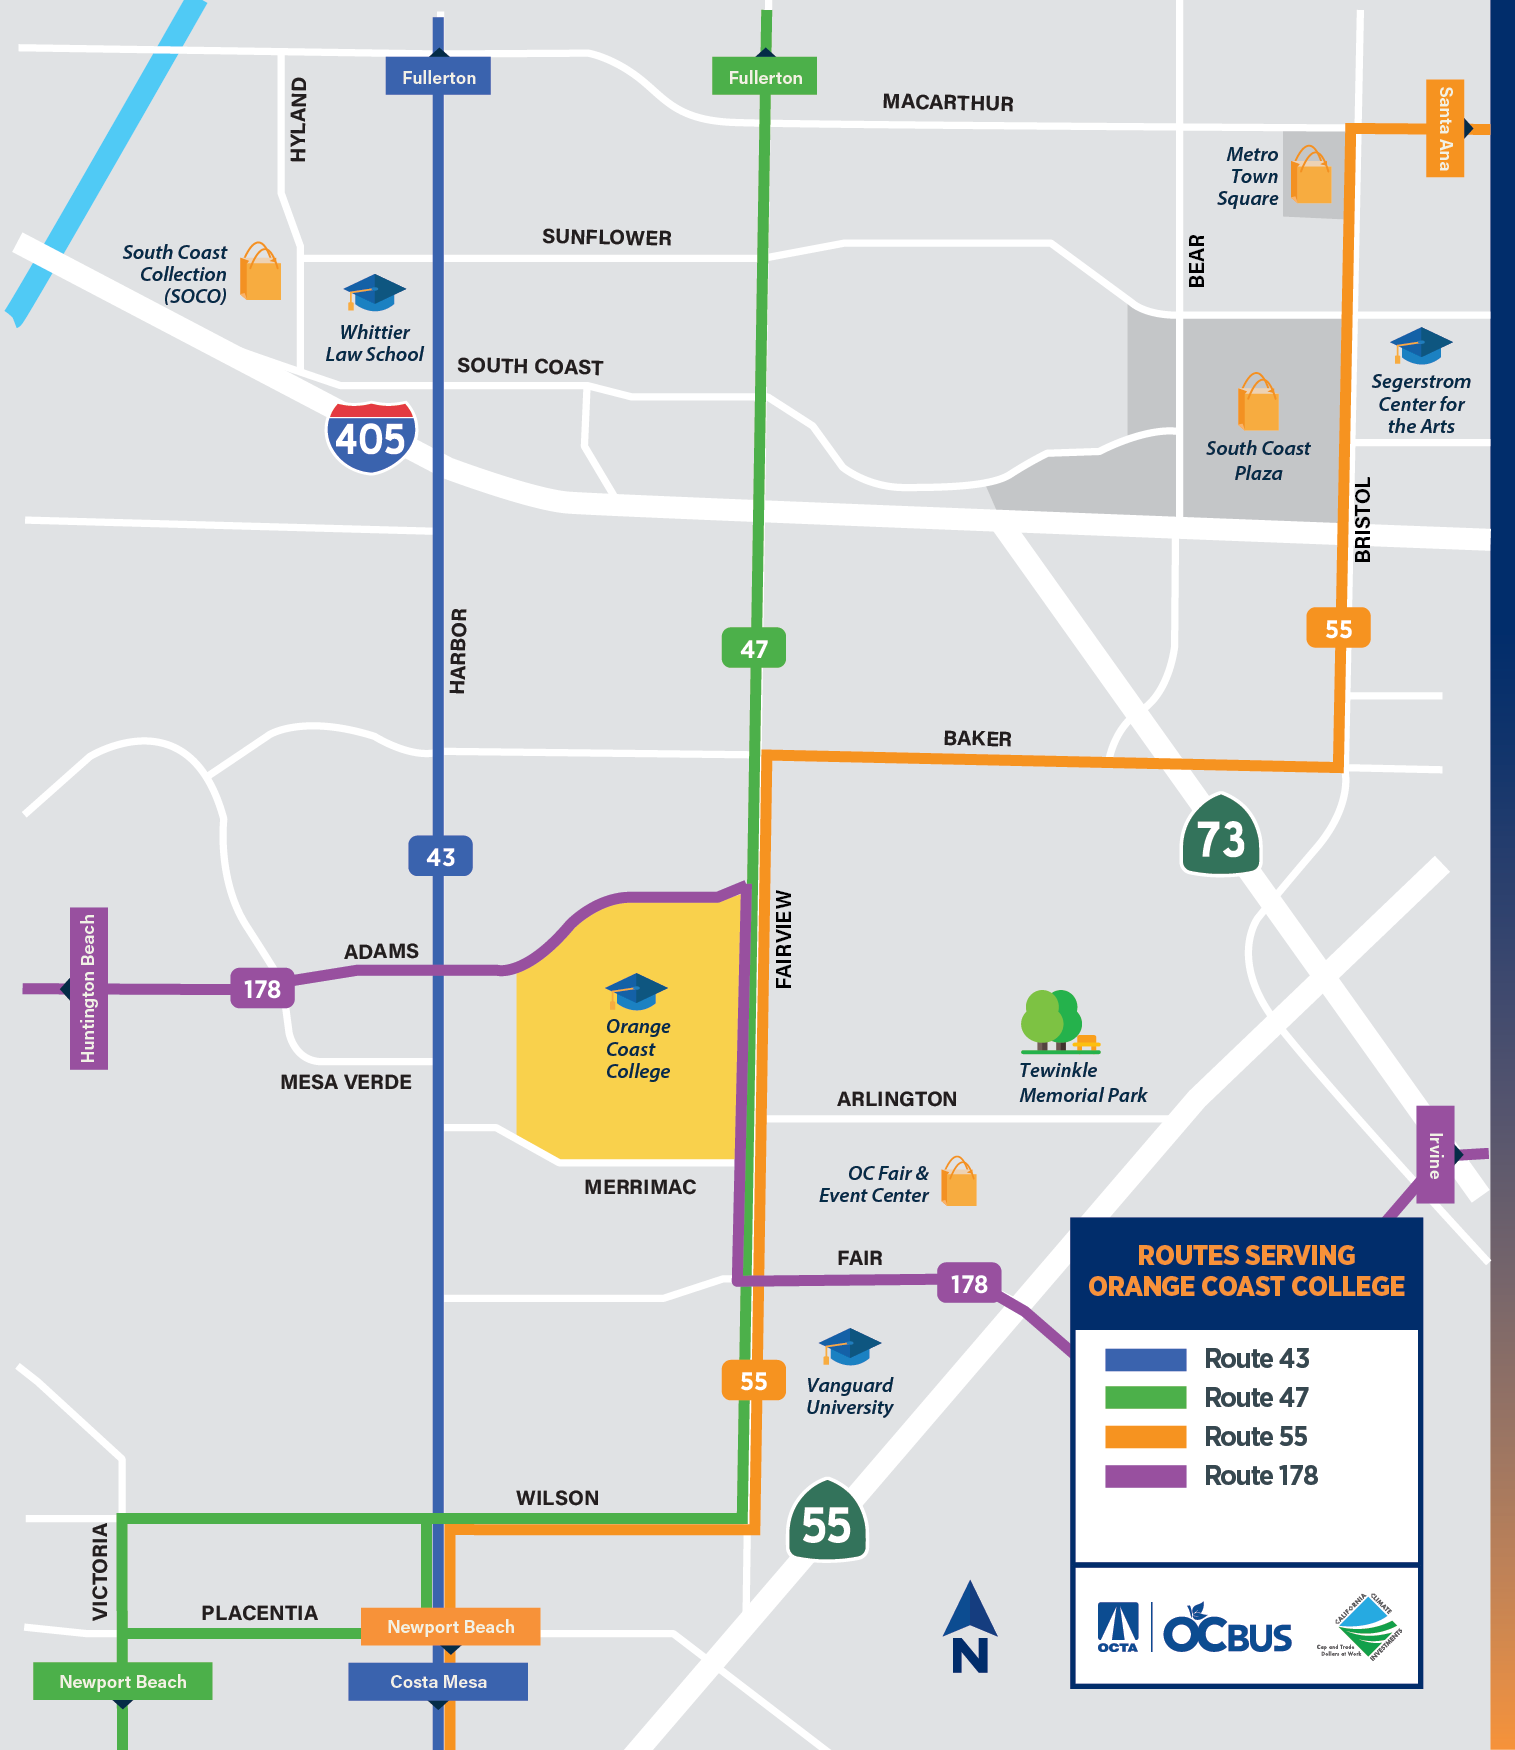 Bus Route service map